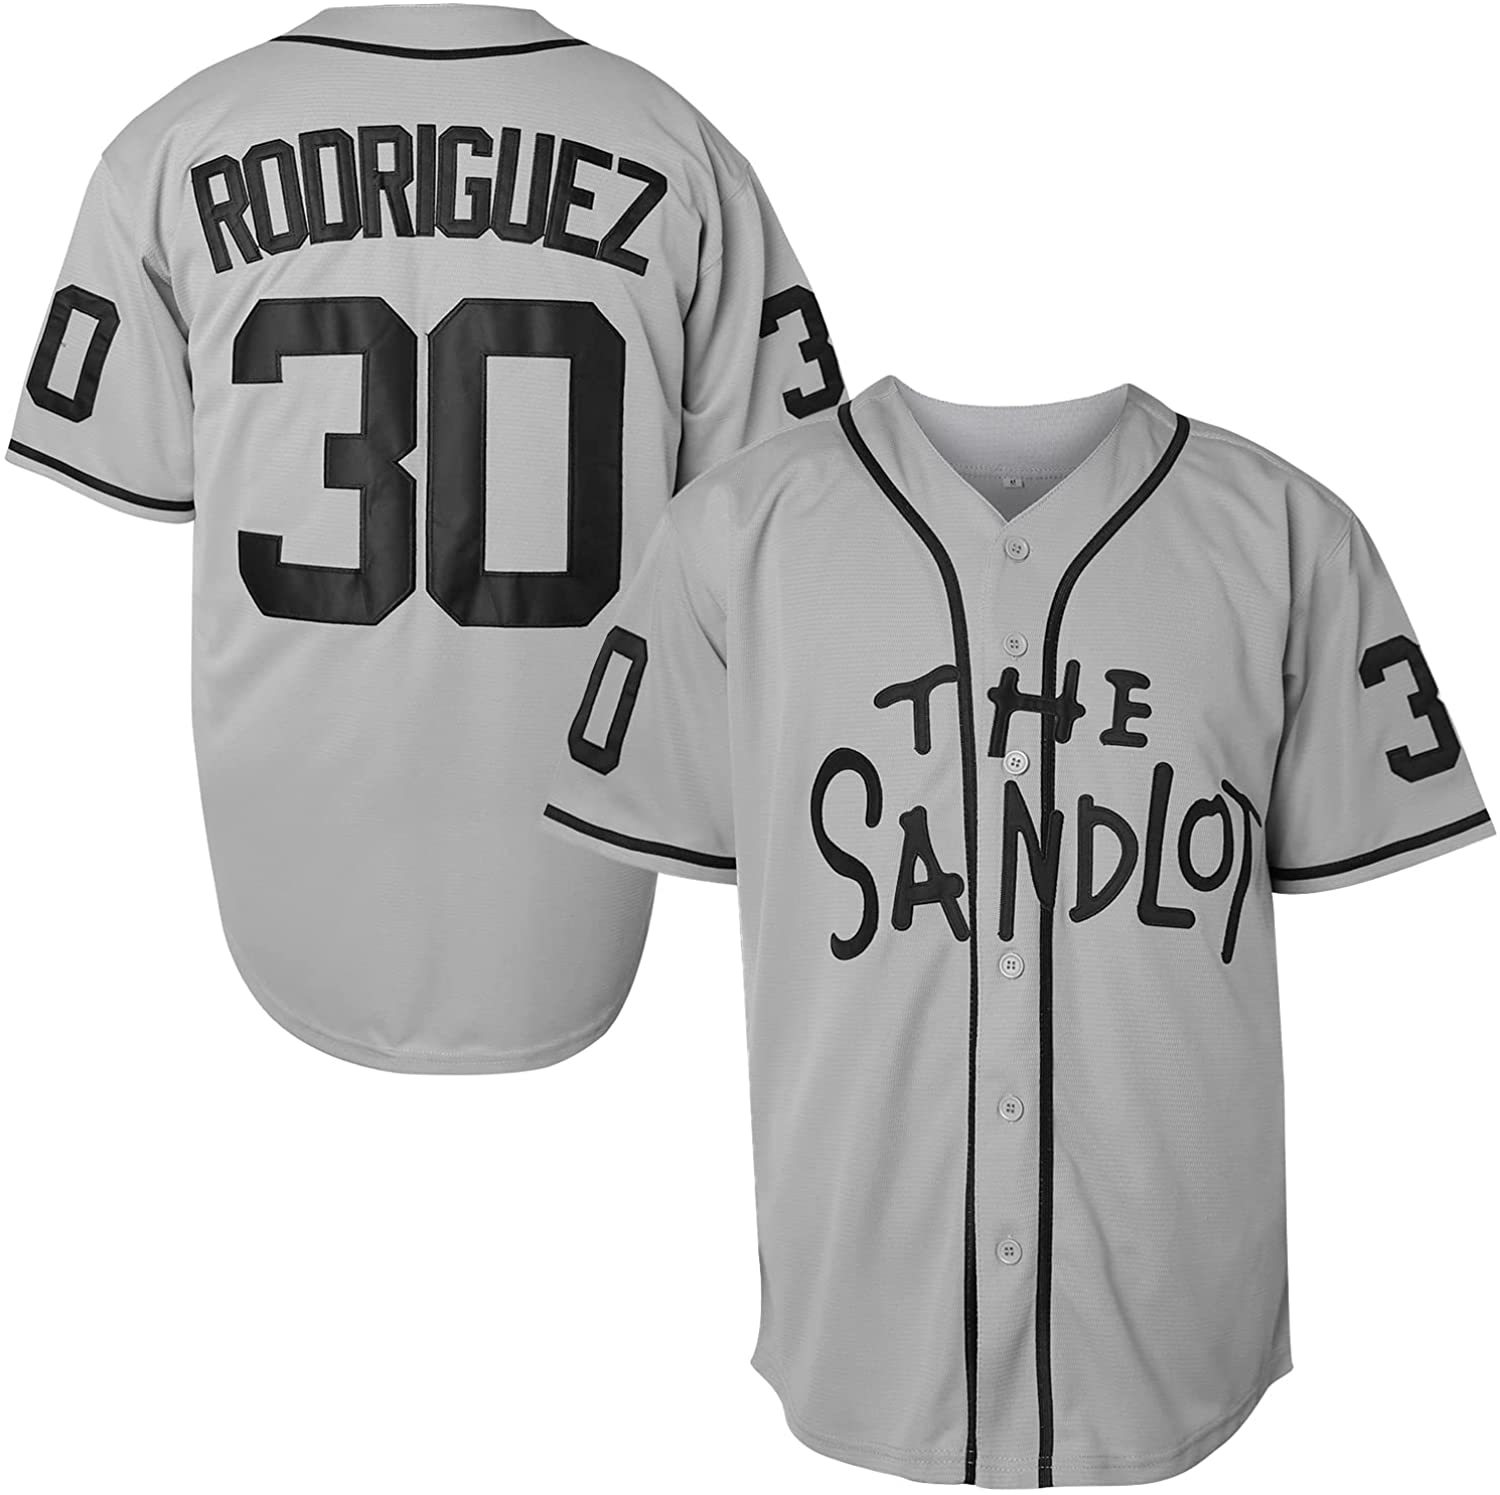 Benny 'The Jet' Rodriguez #30 The Sandlot Movie Baseball Jersey New Gray